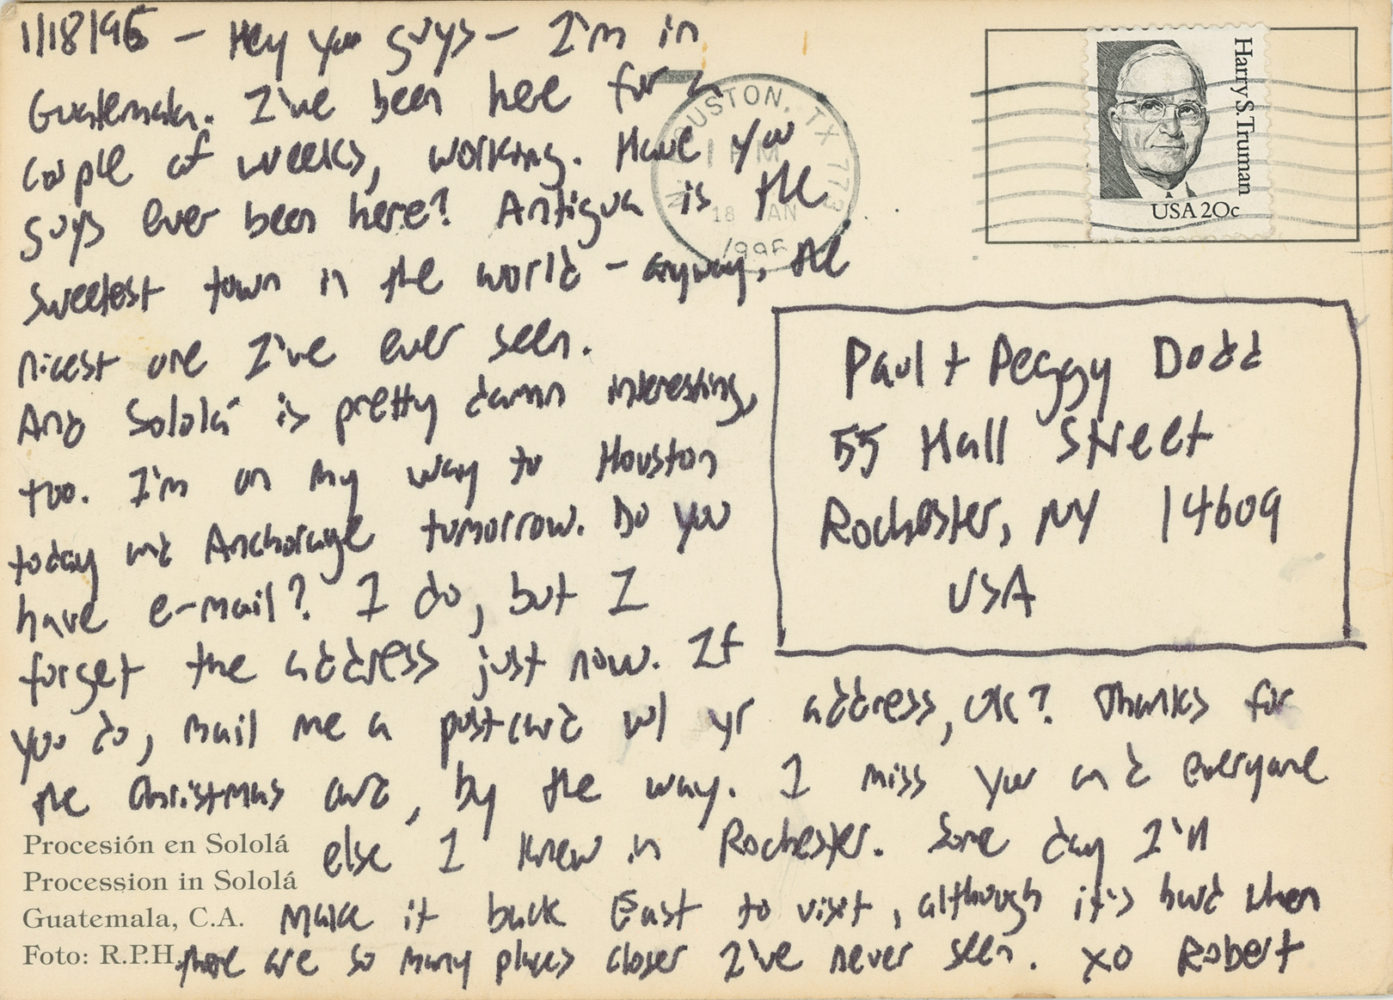 Post card from Robert Meyerowitz 1986